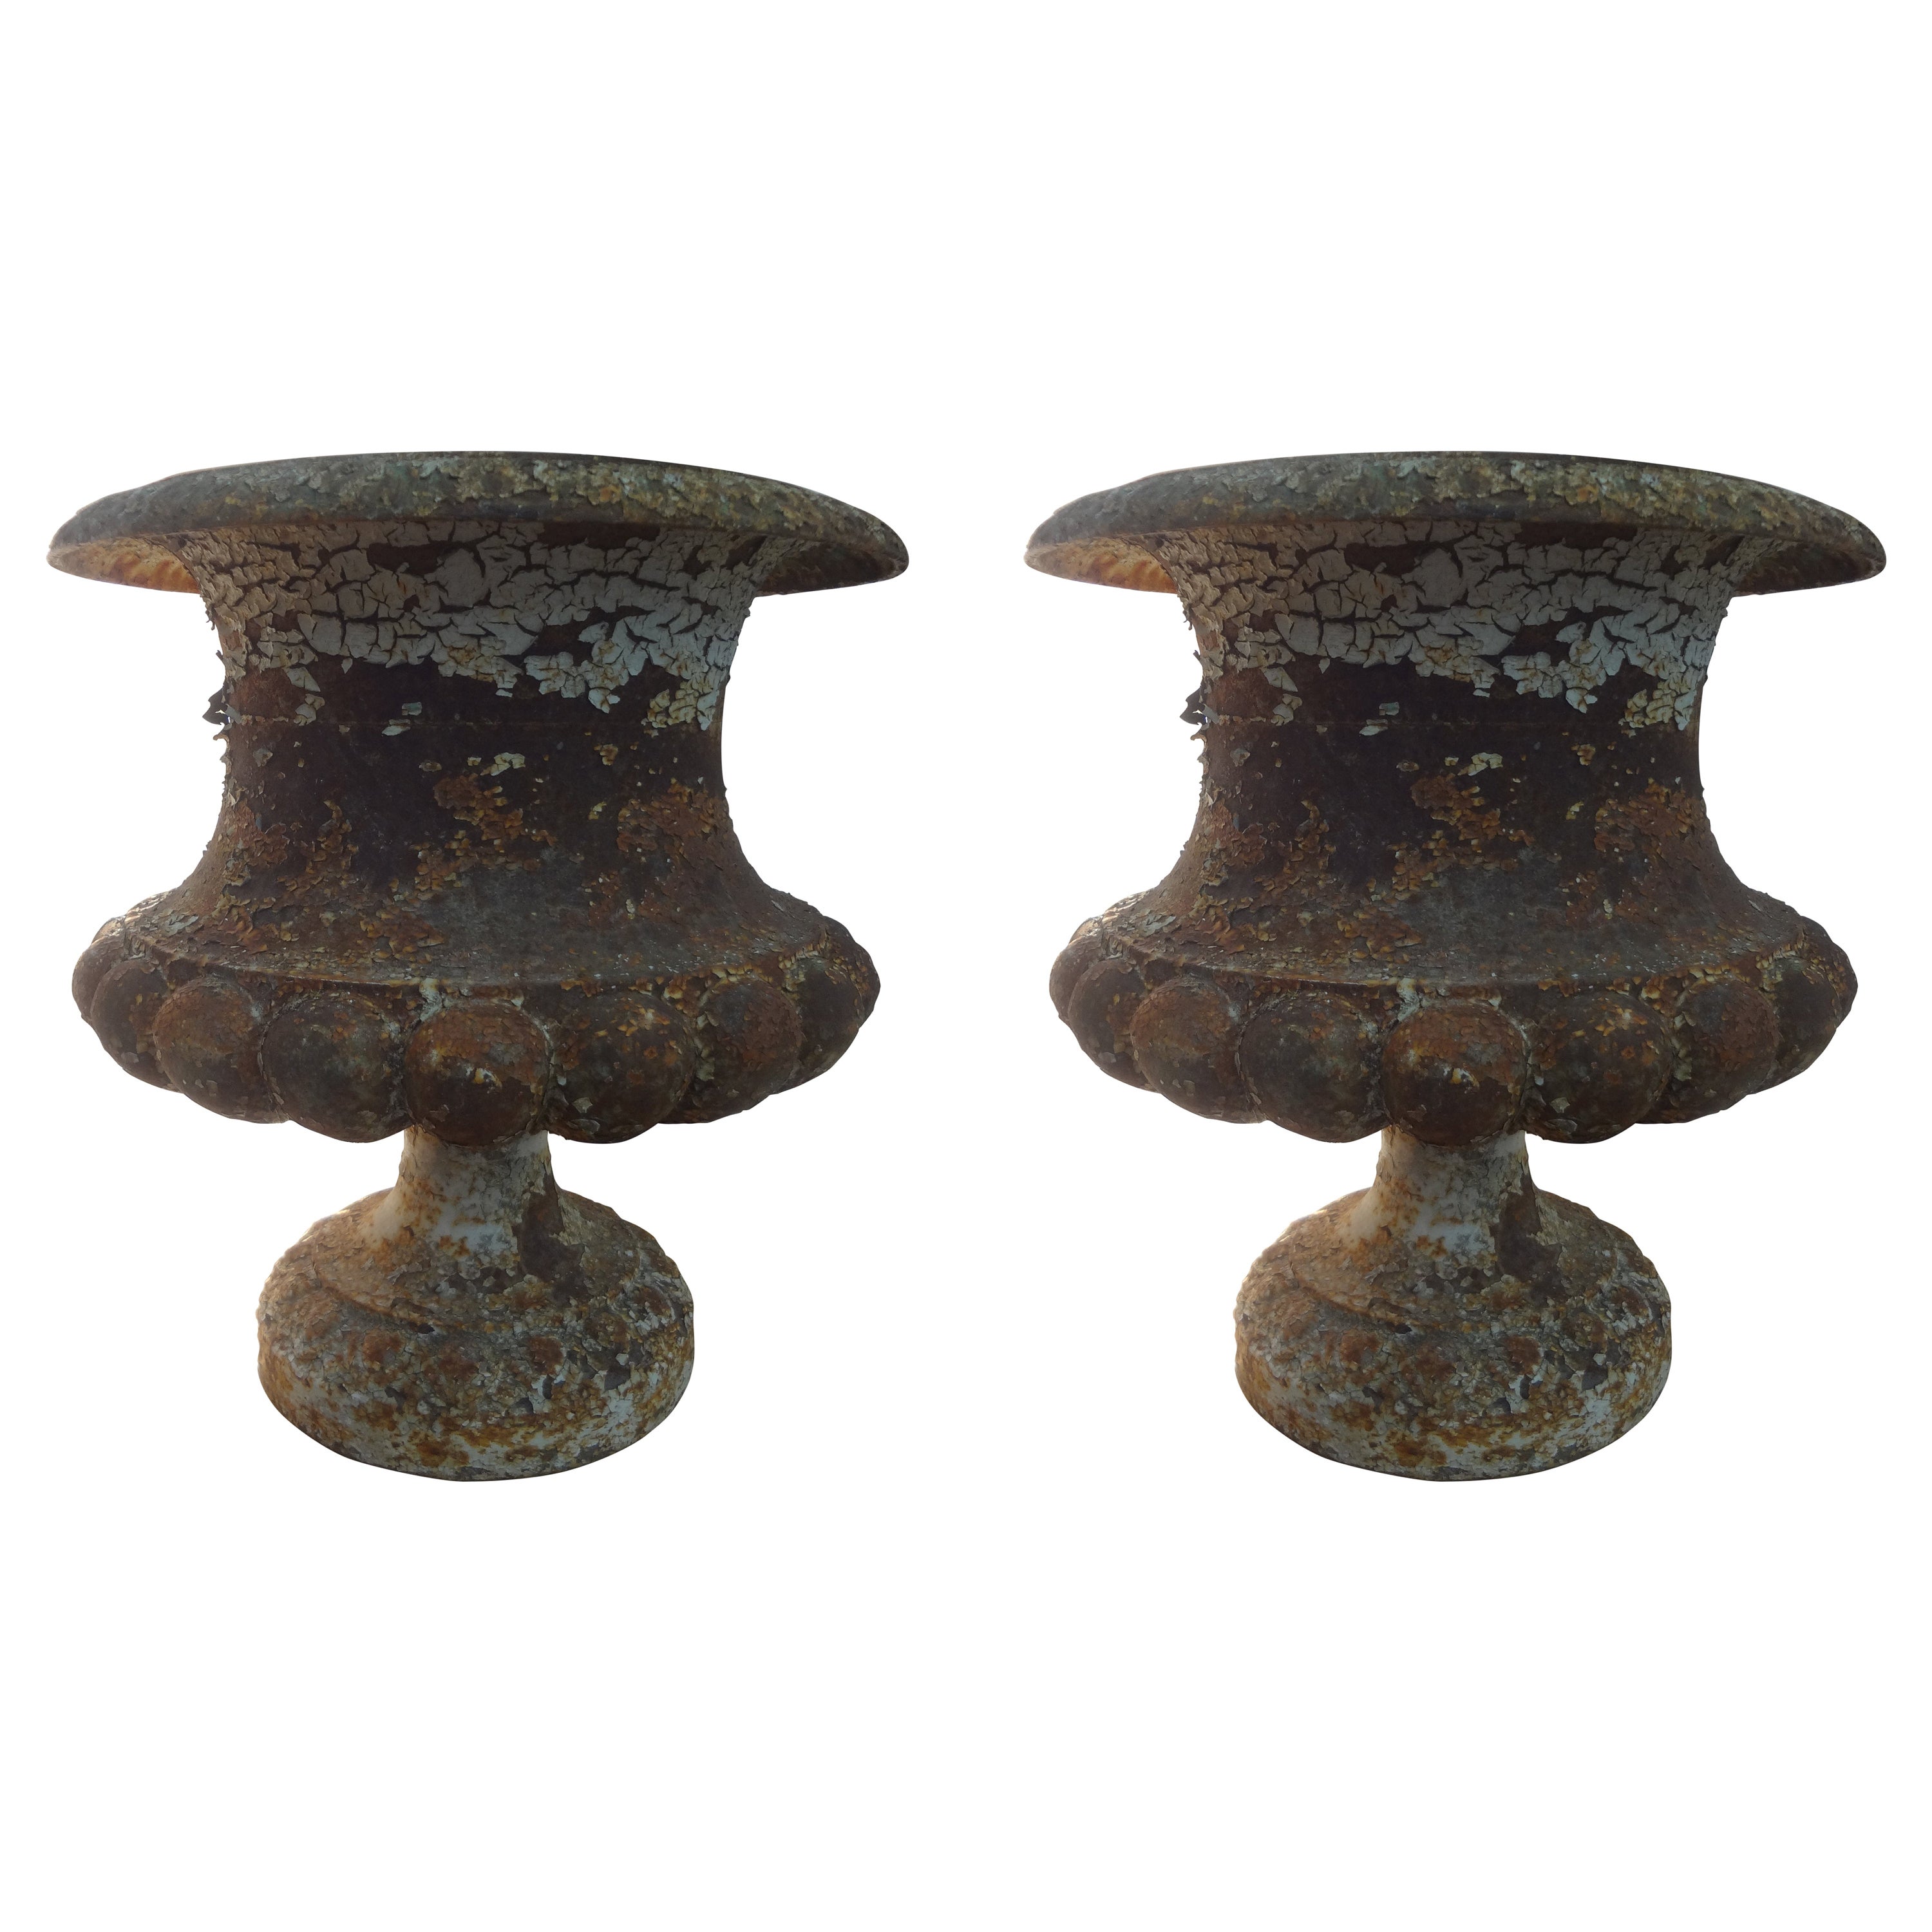 Pair Of 19th Century French Iron Garden Urns